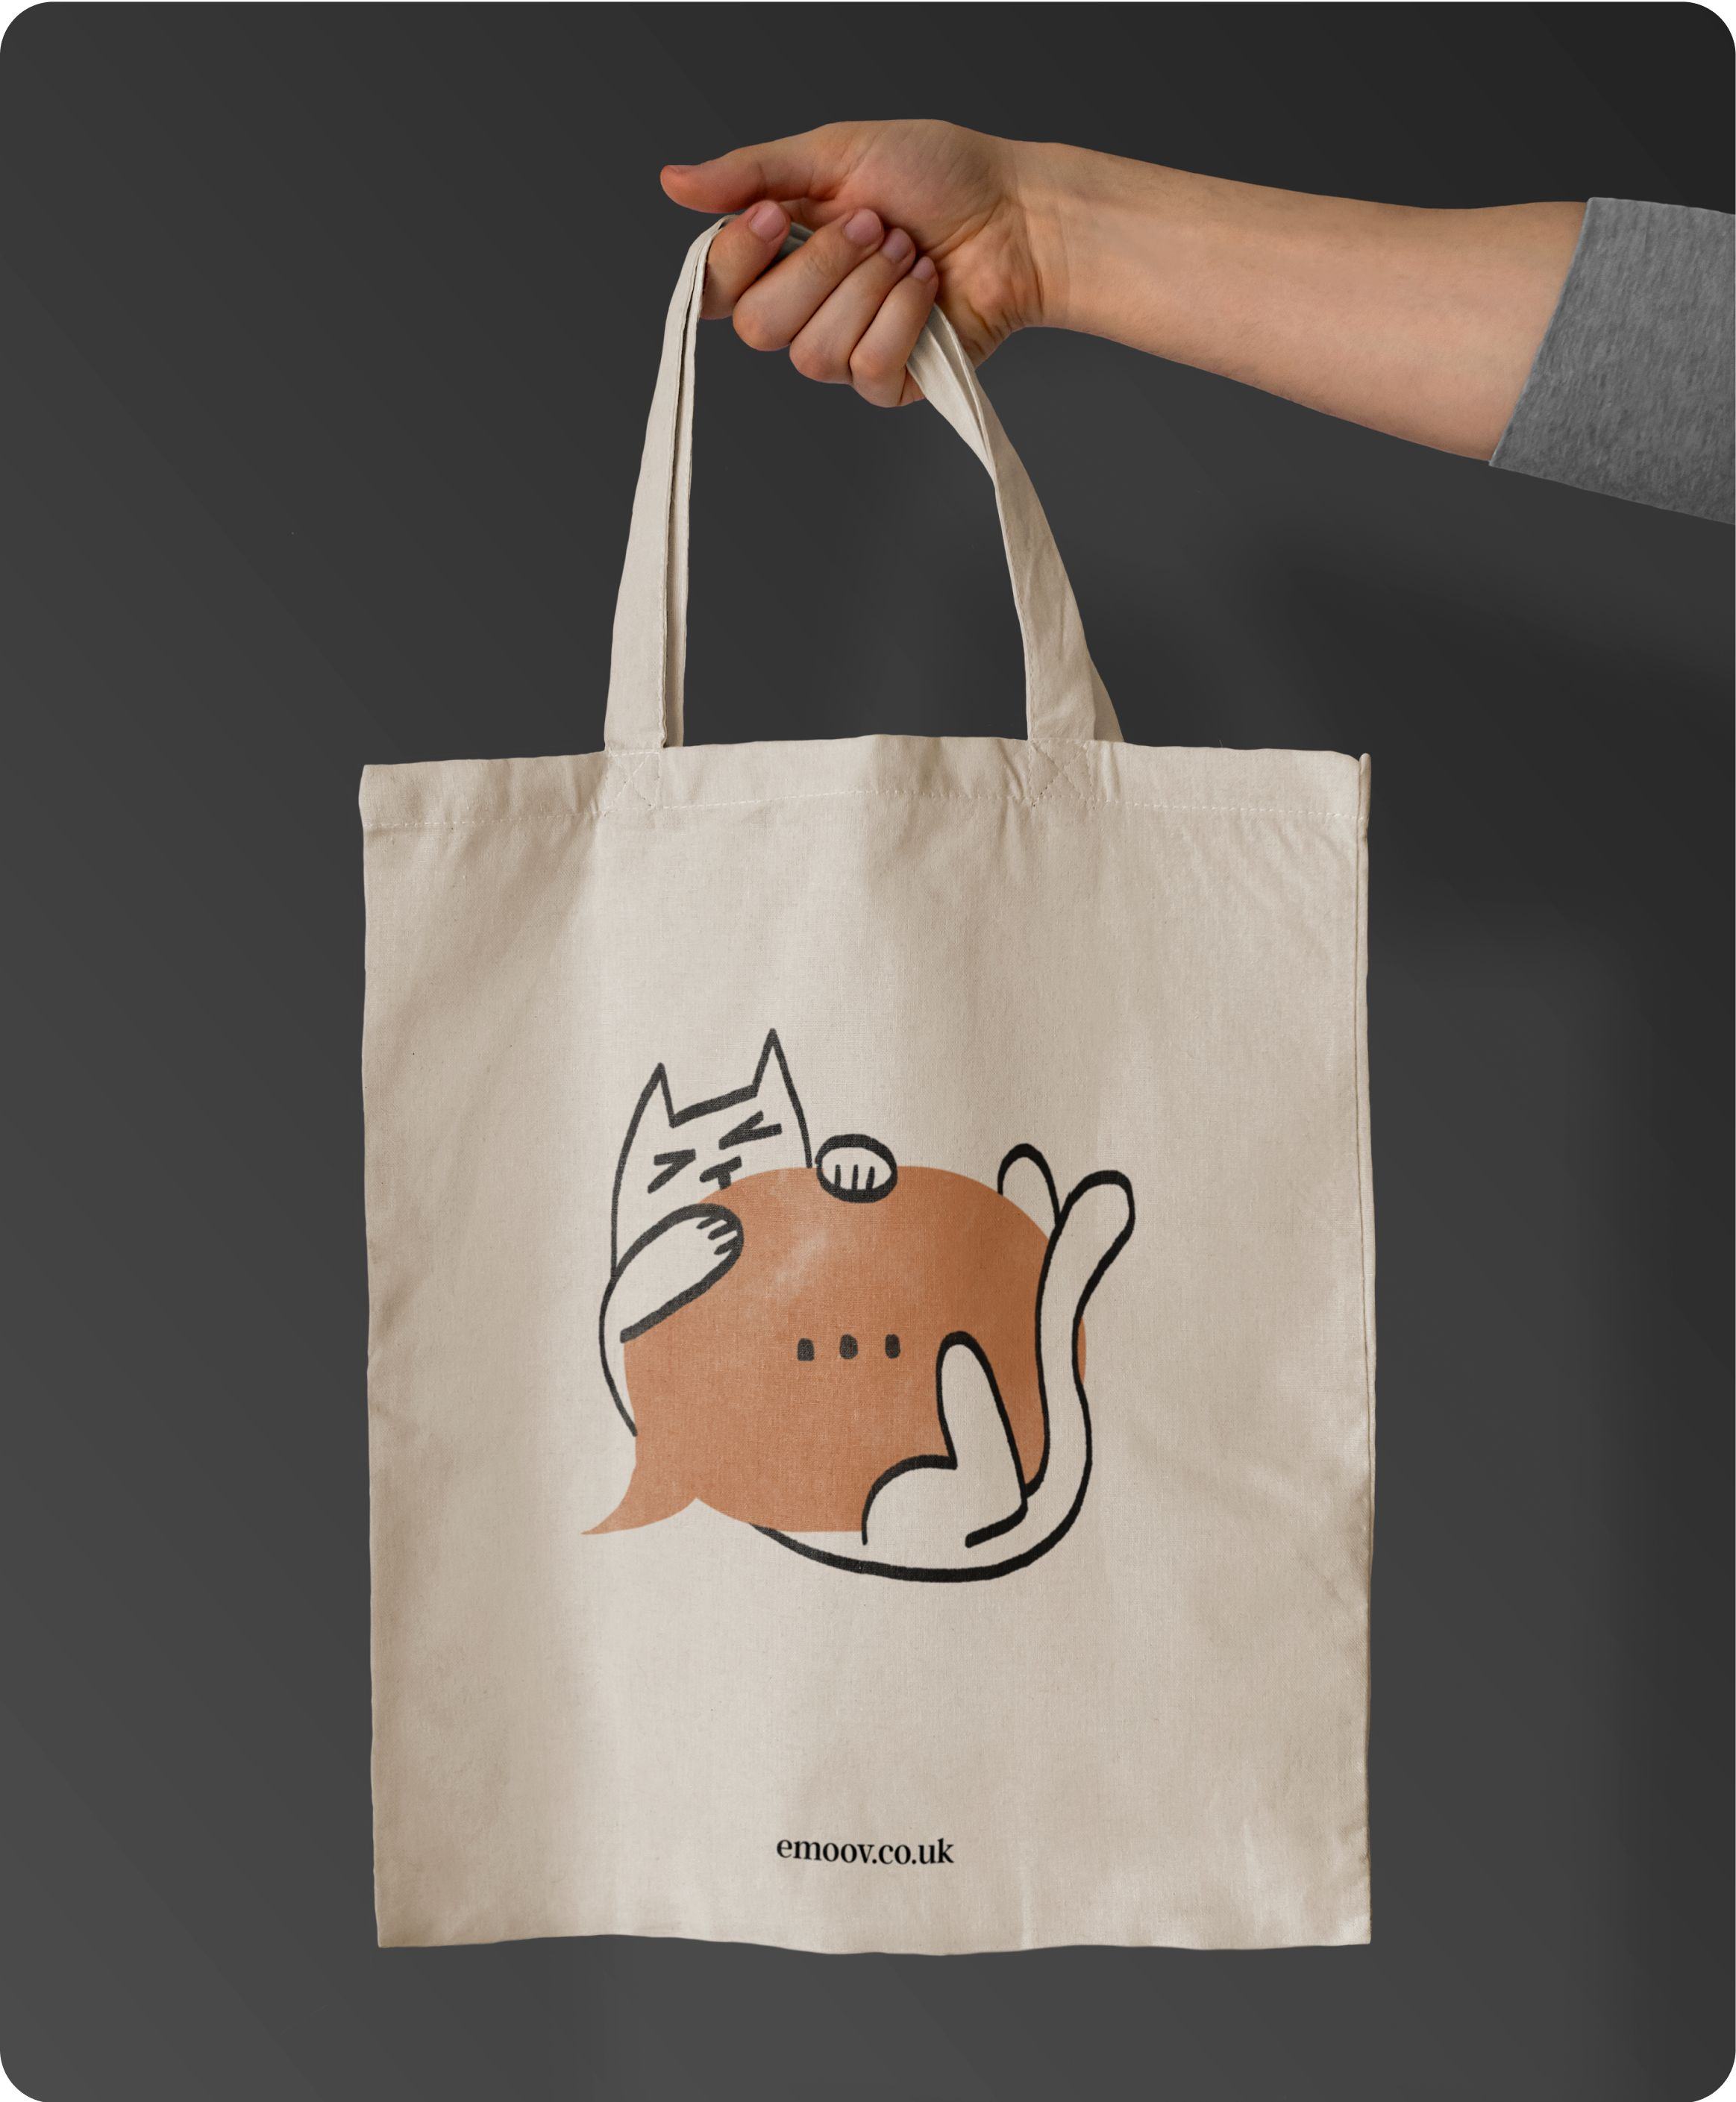 Emoov branding tote bag